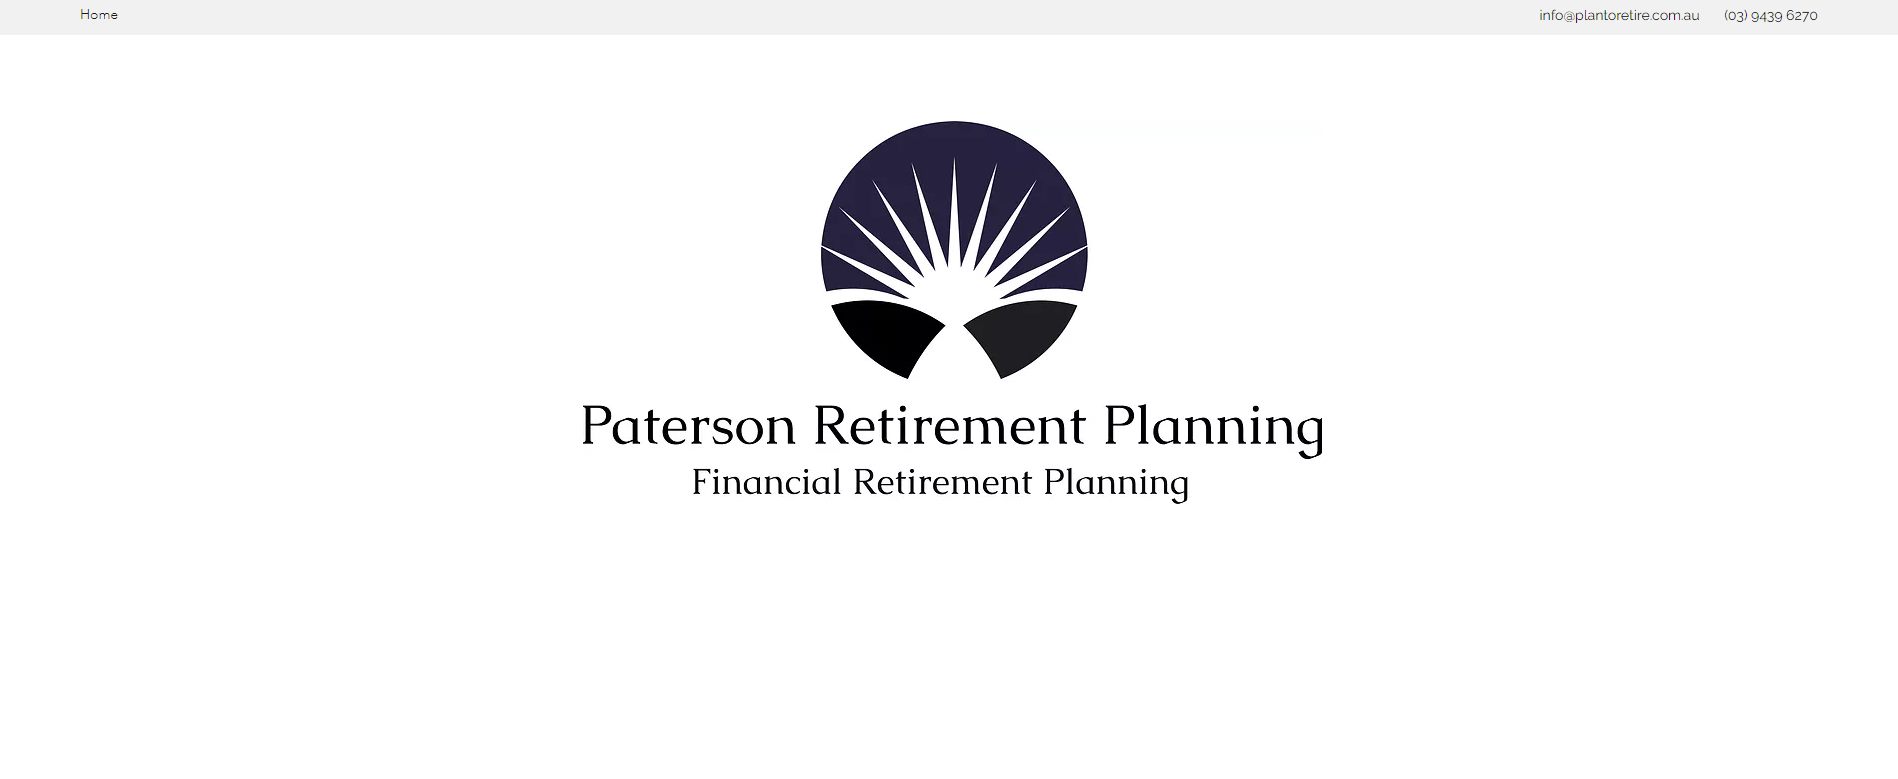 paterson retirement planning financial planners & advisors melbourne